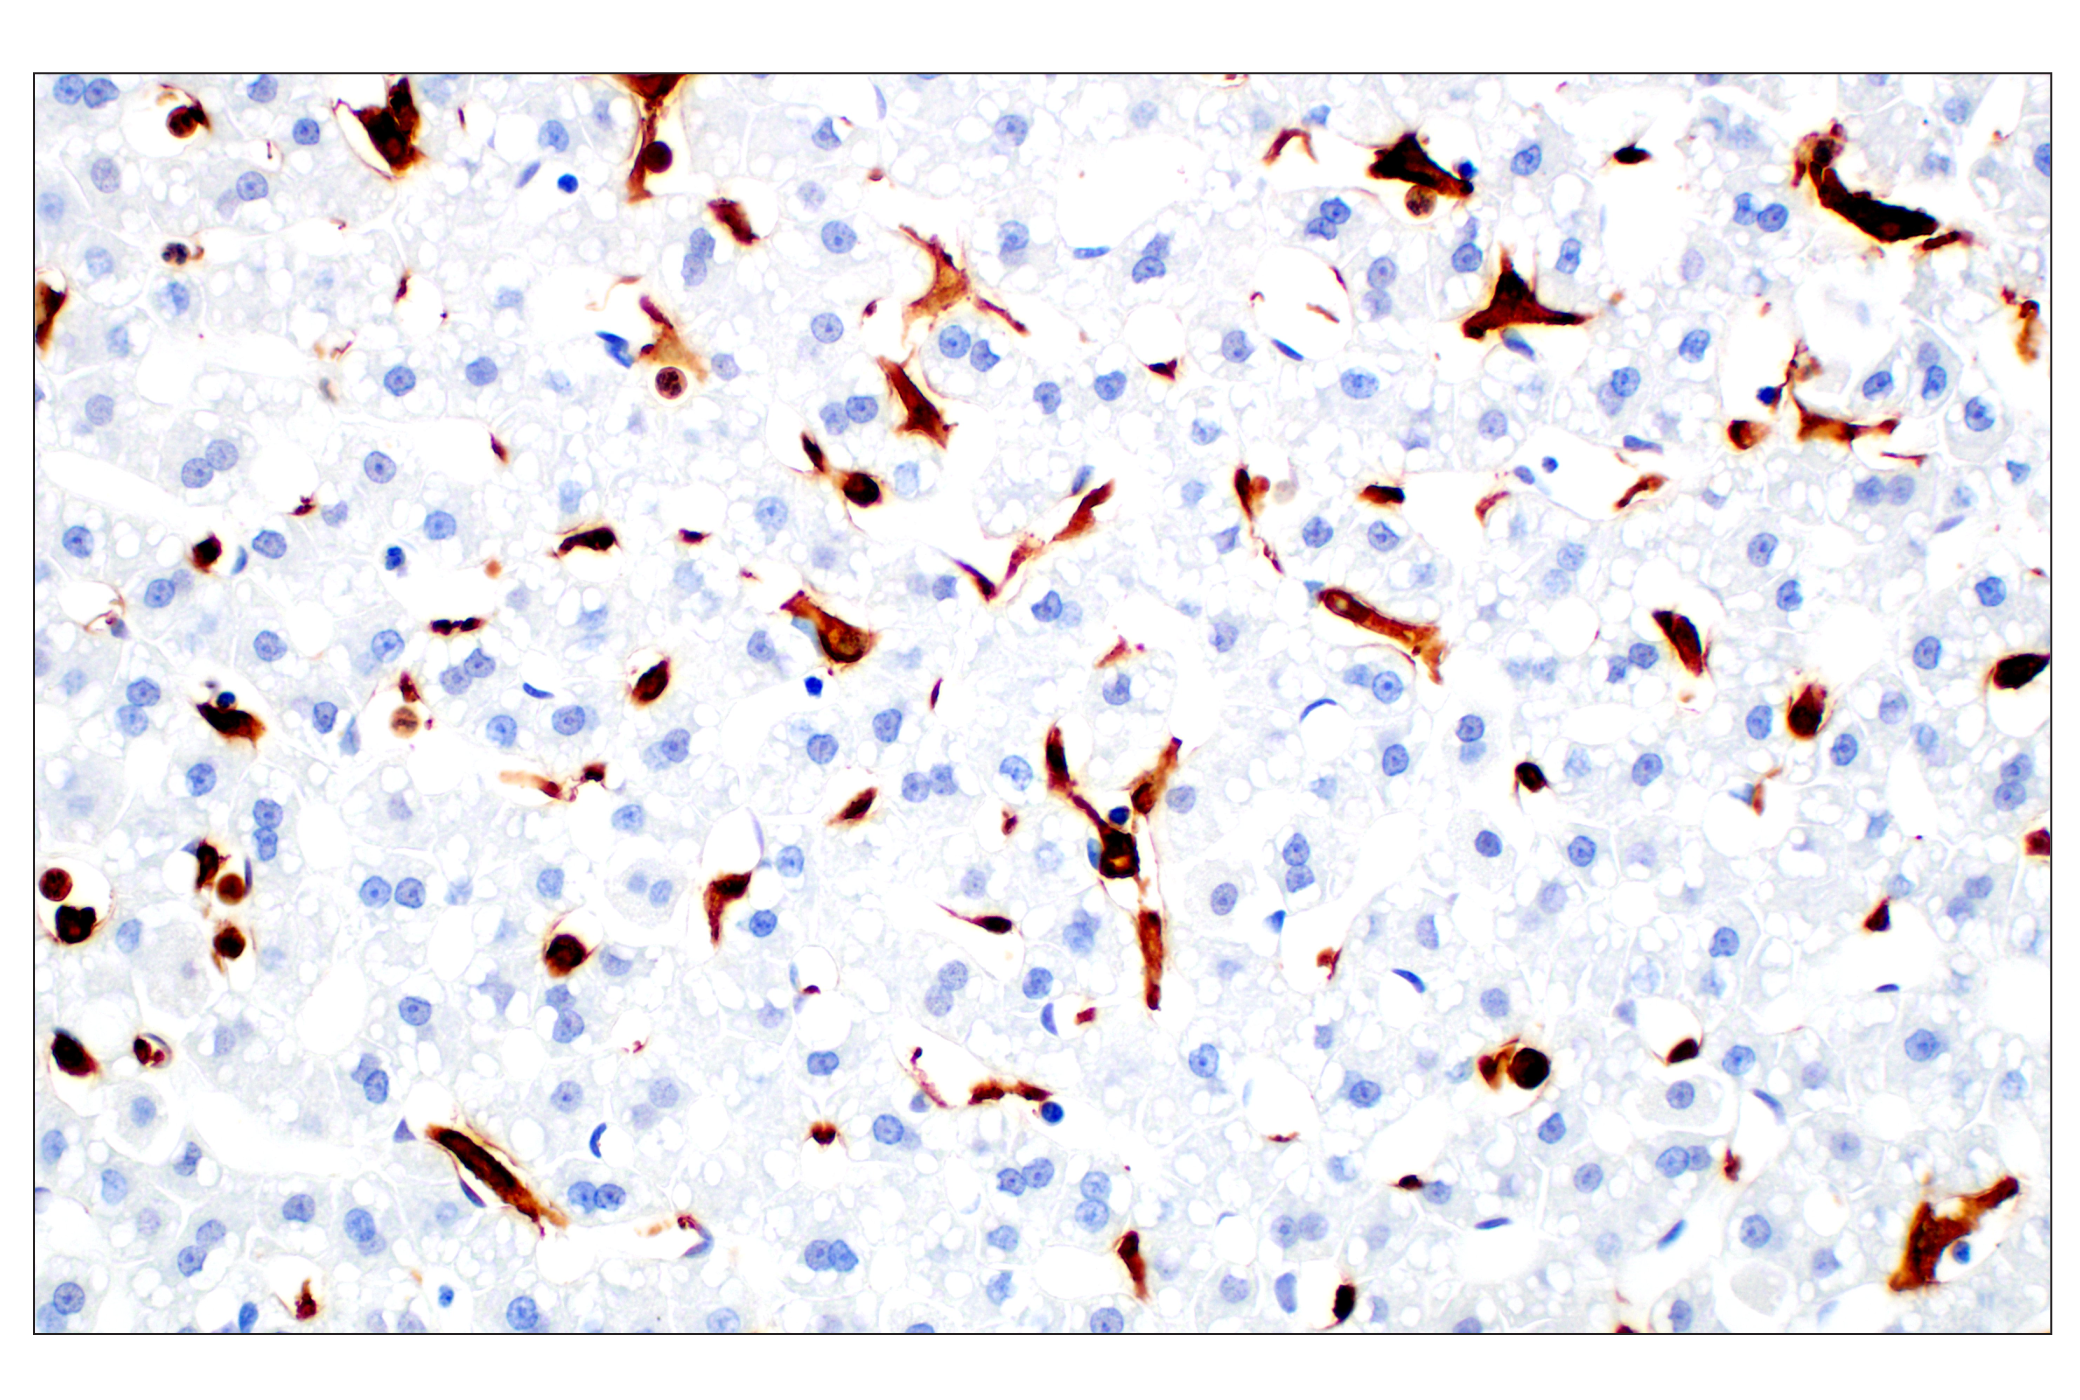  Image 58: Mouse Microglia Marker IF Antibody Sampler Kit